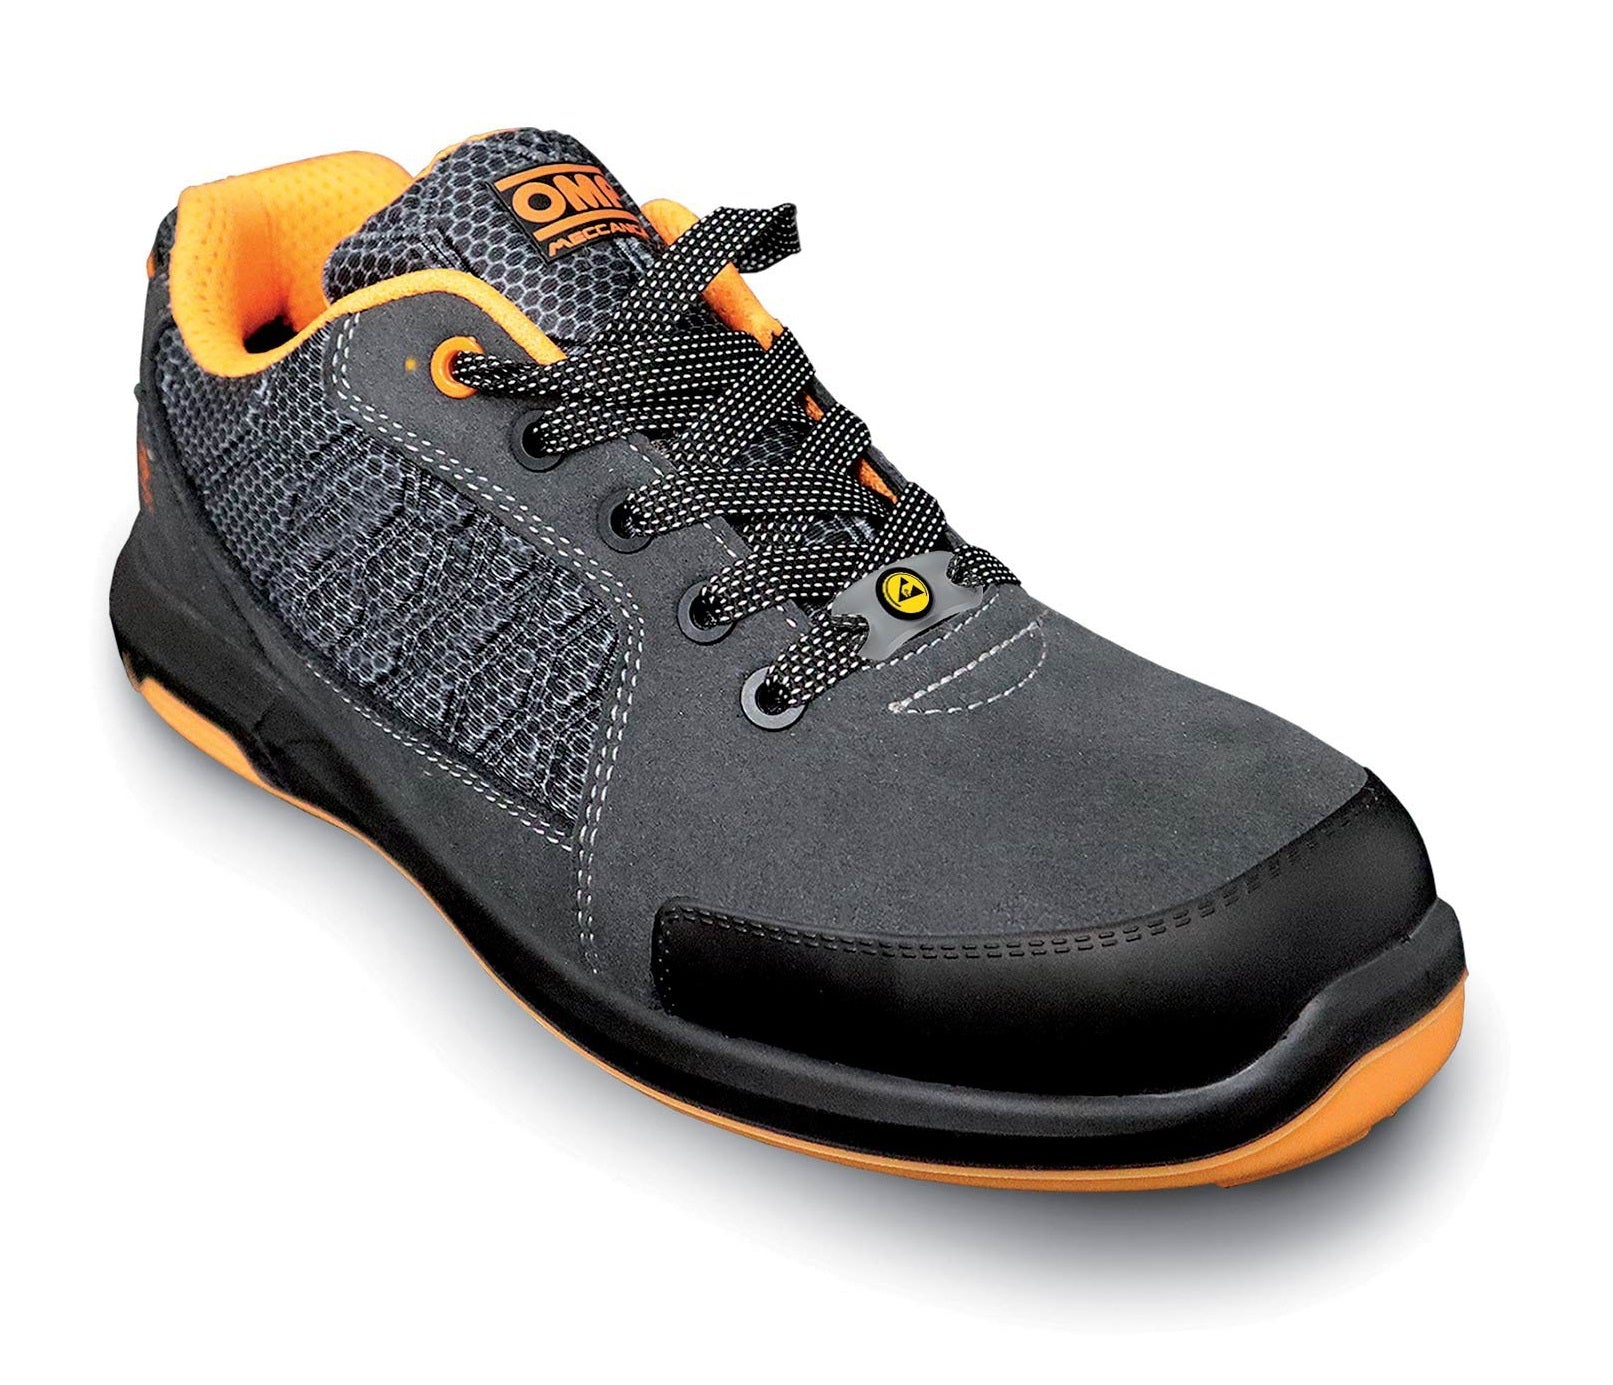 OMP OMPS90014020 Pro Sport Safety Mechanic's shoes, black/orange, size 40 Photo-0 